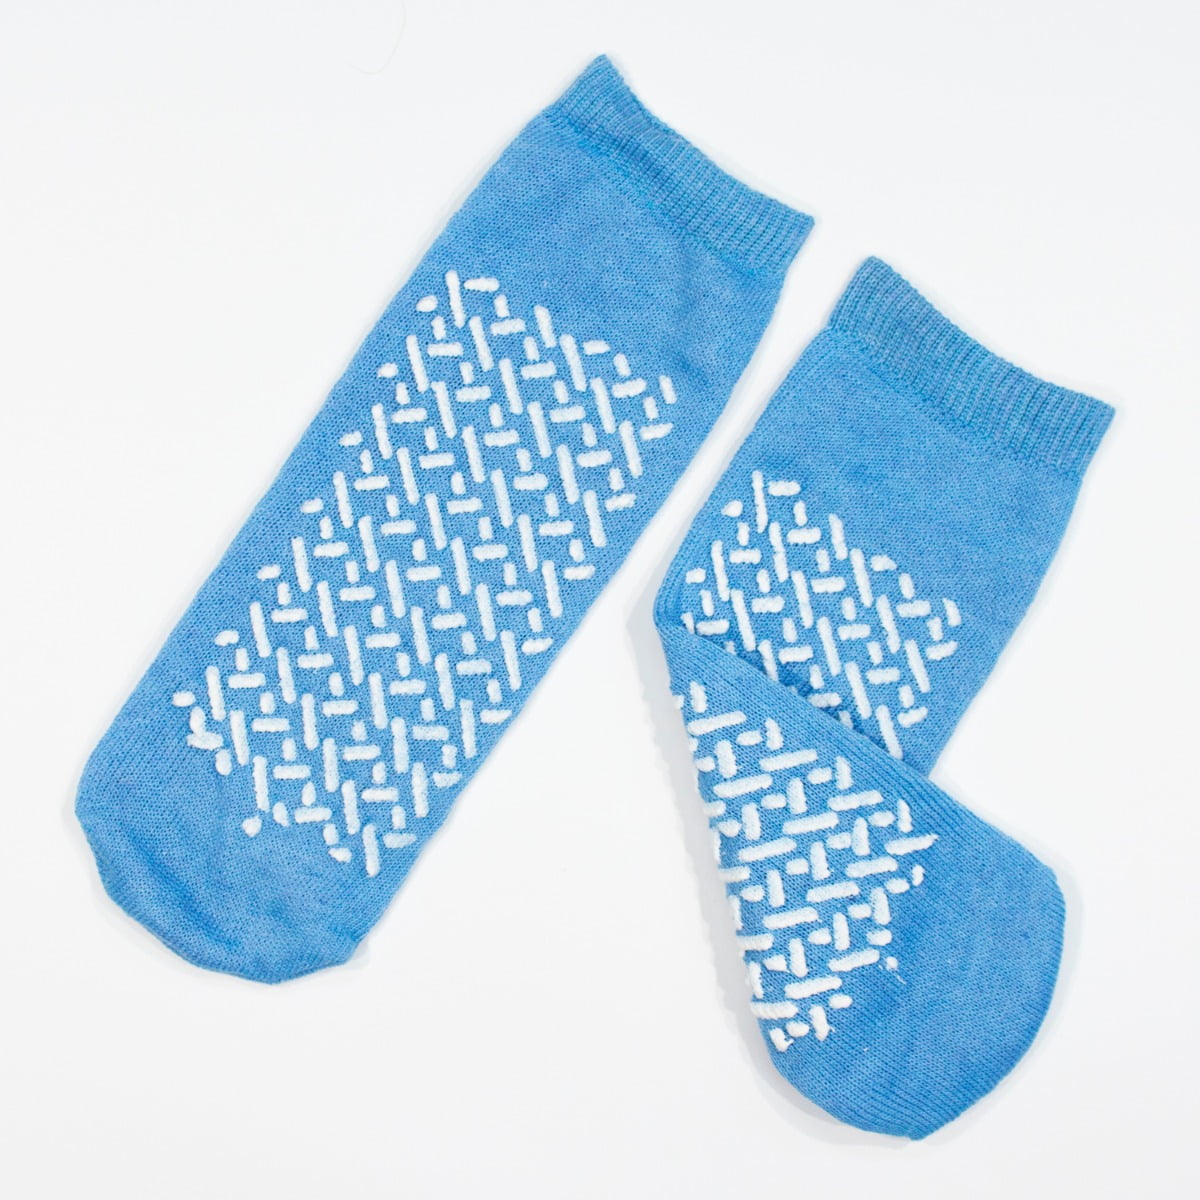 Dynarex Double Sided Slipper Socks Large Sky Blue, Each